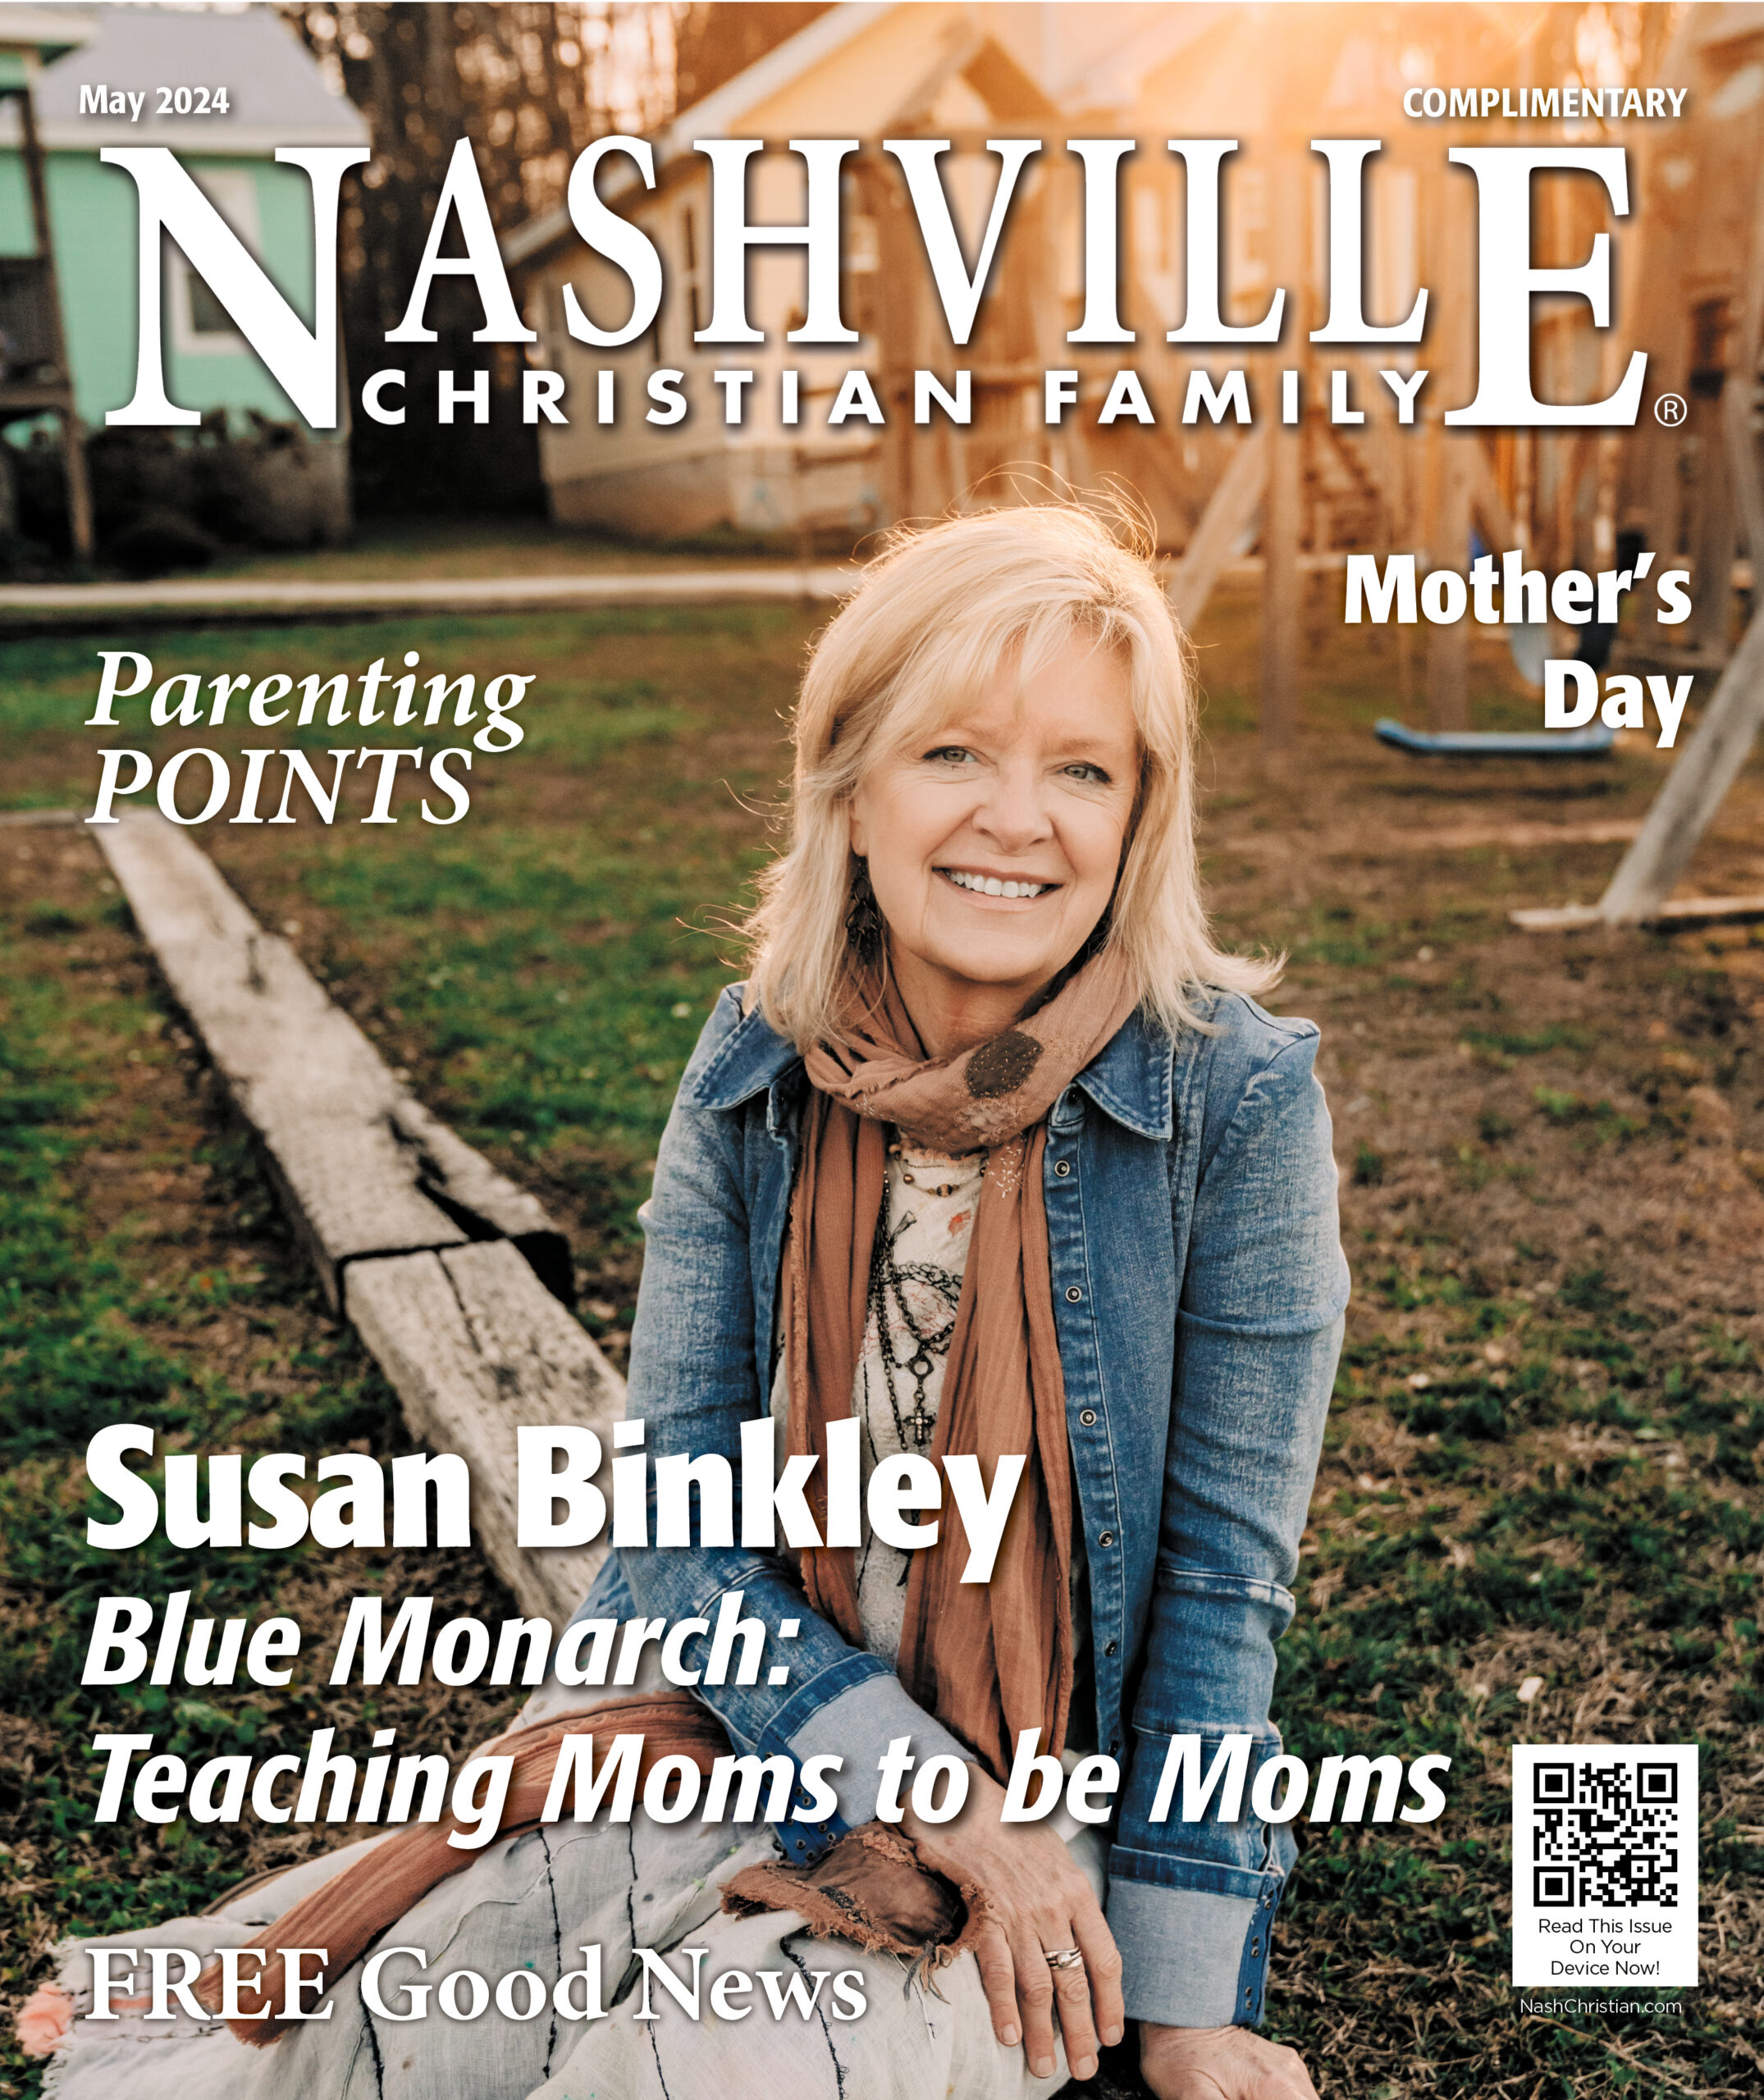 Nashville Christian Family magazine - May 2024 issue | Nashville Christian Family Magazine